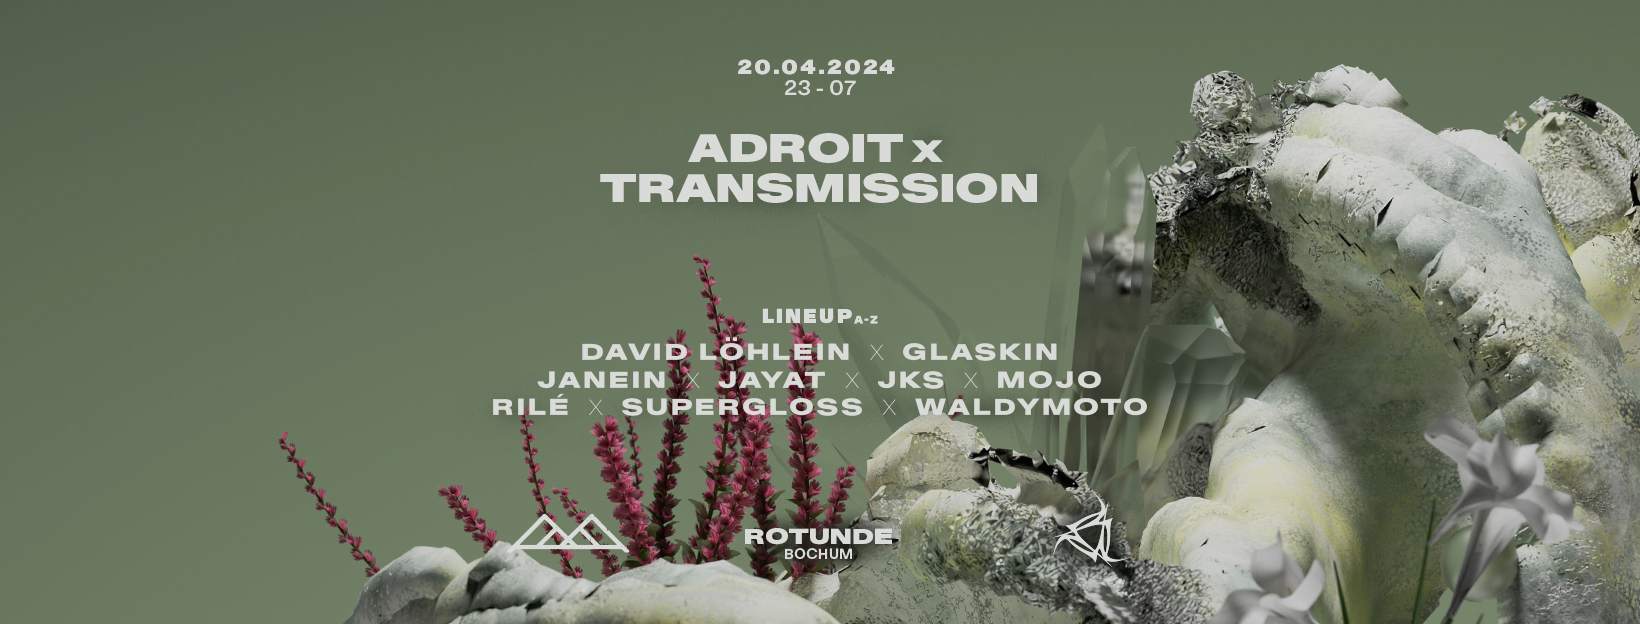 Adroit x Transmission - Página frontal